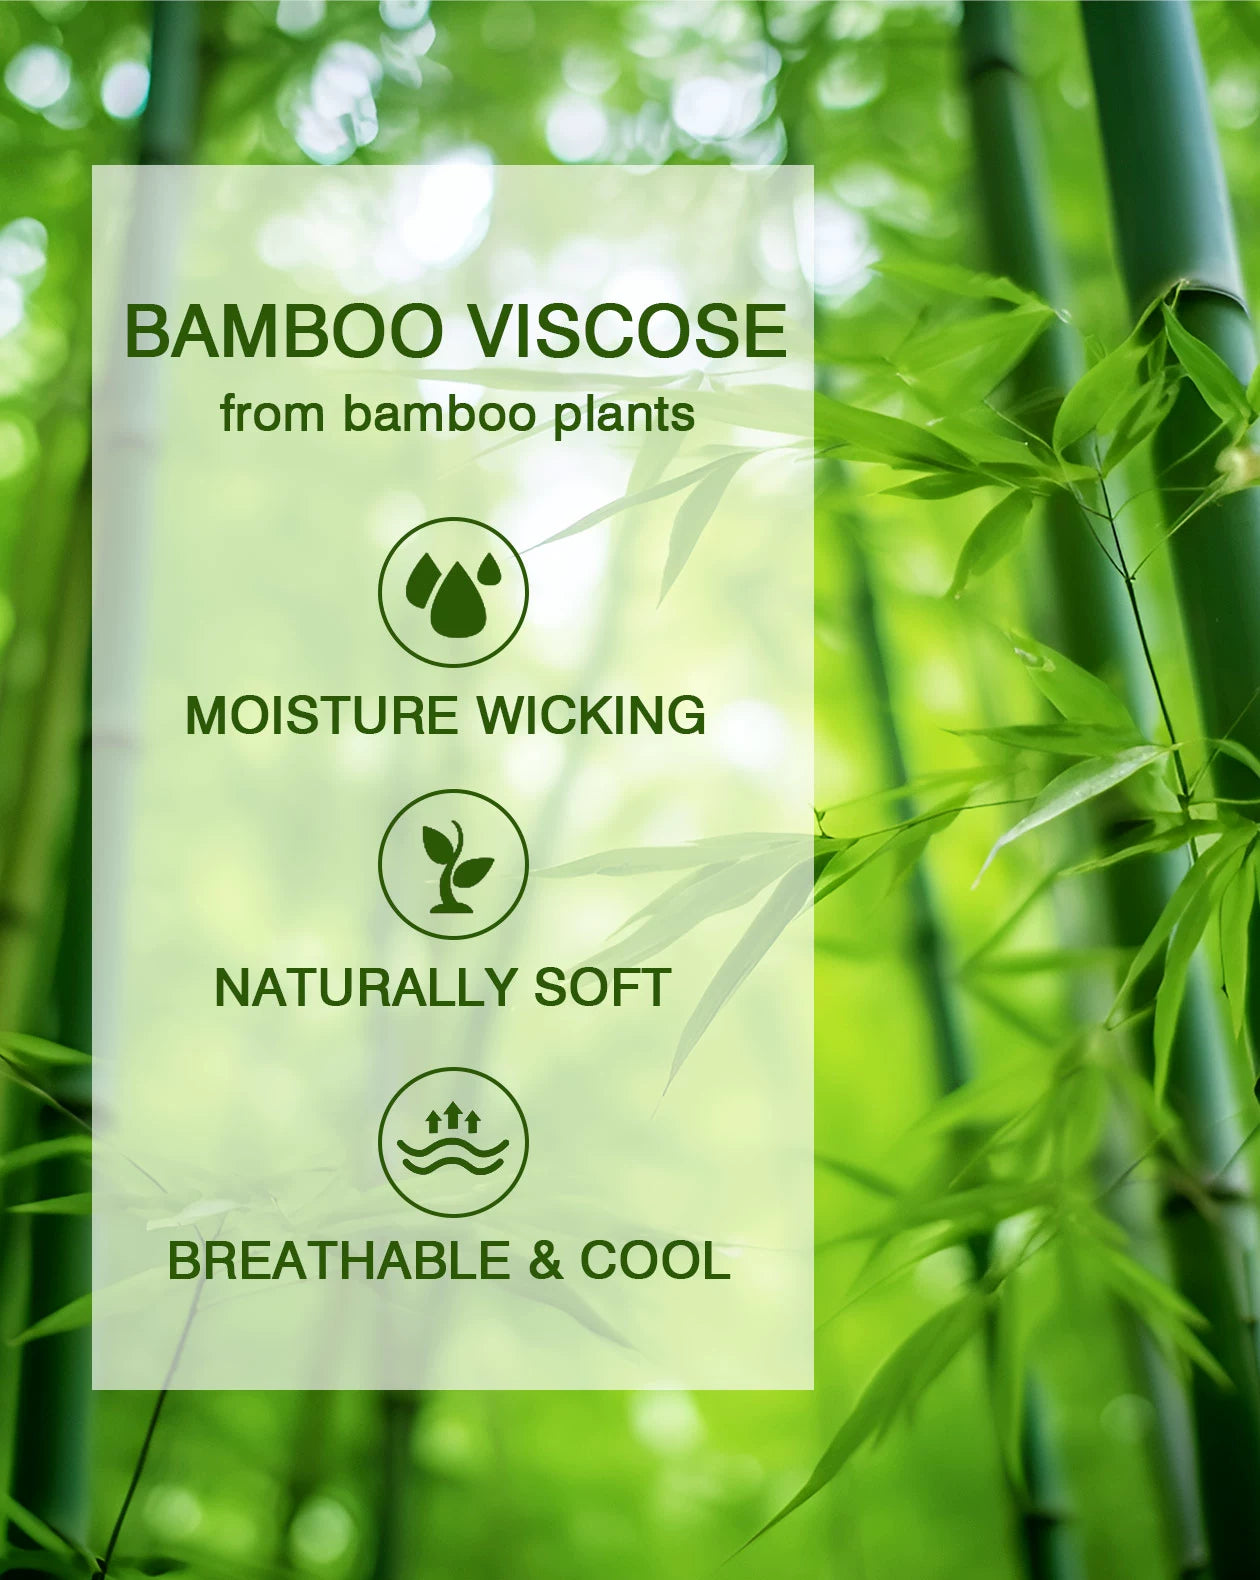 Dubinik® Bamboo Viscose Mens Short Sleeve Button Down Pockets Shirts#39010